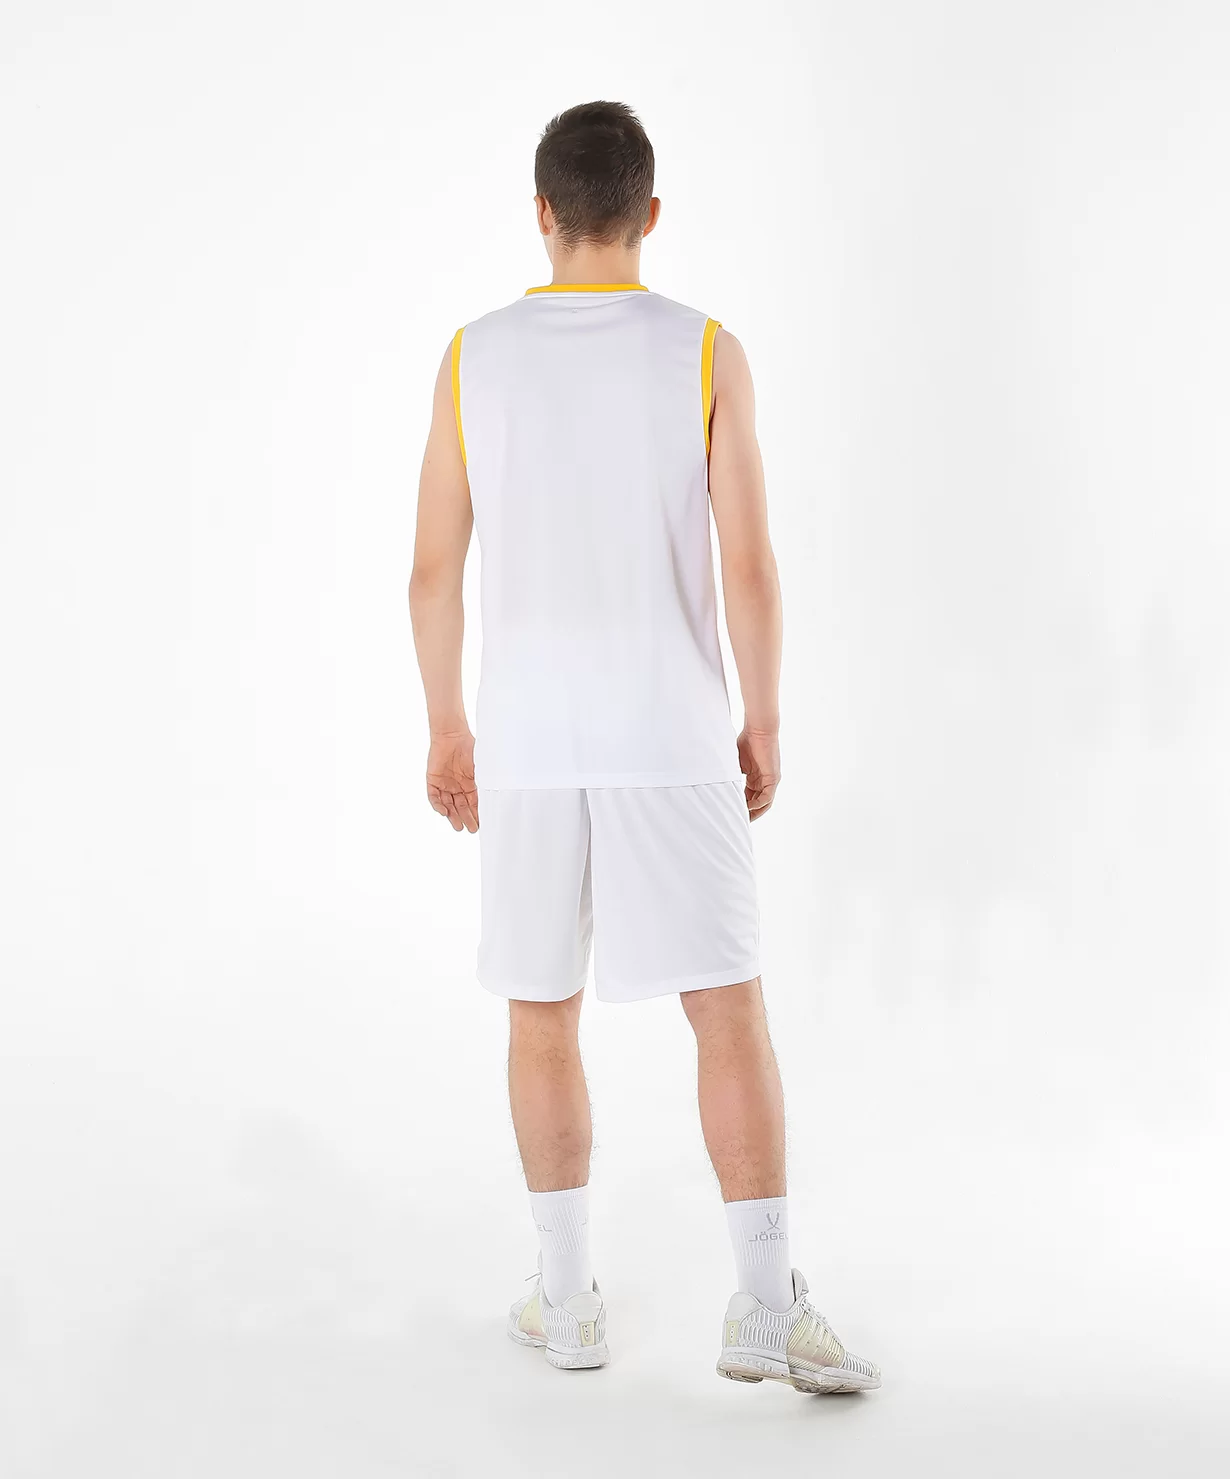 Фото Майка баскетбольная JBT-1020-014, белый/желтый со склада магазина СпортСЕ